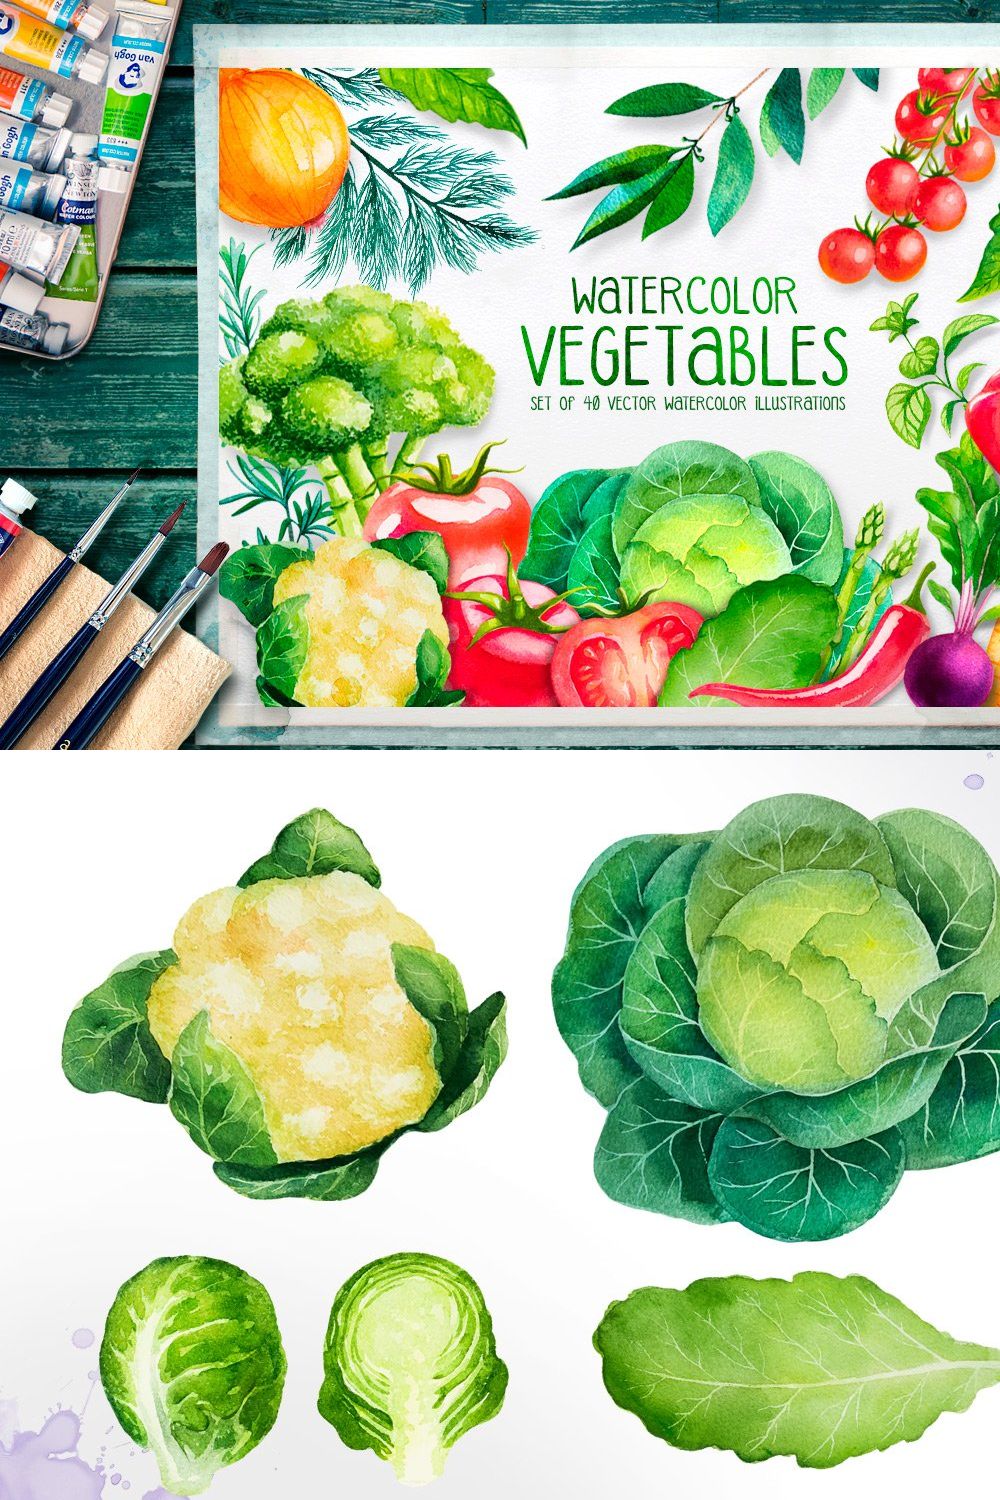 Watercolor vegetables pinterest preview image.